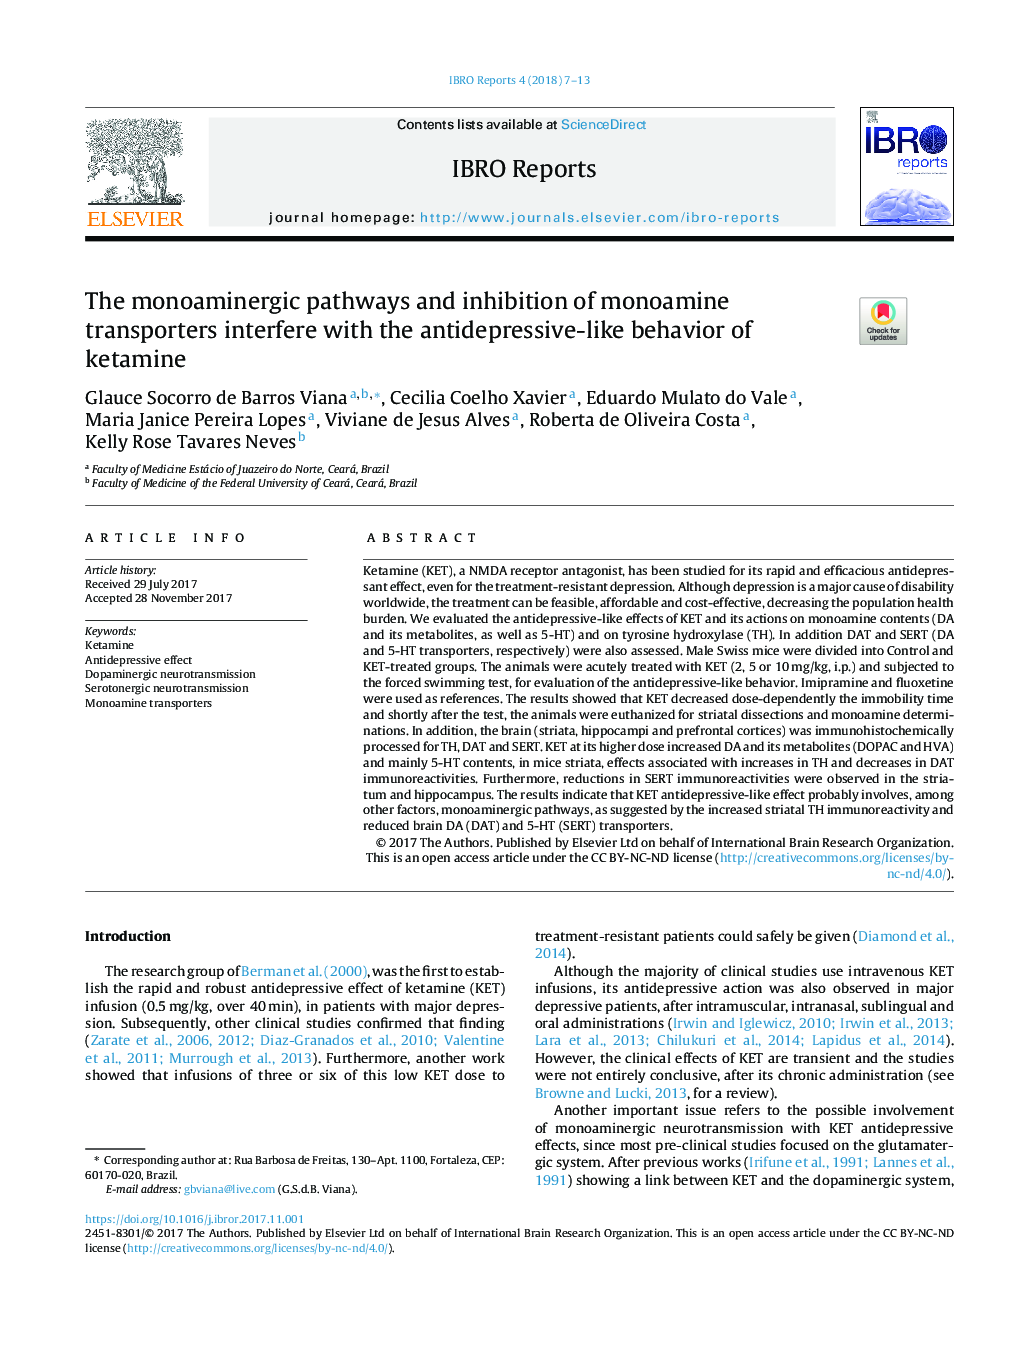 The monoaminergic pathways and inhibition of monoamine transporters interfere with the antidepressive-like behavior of ketamine